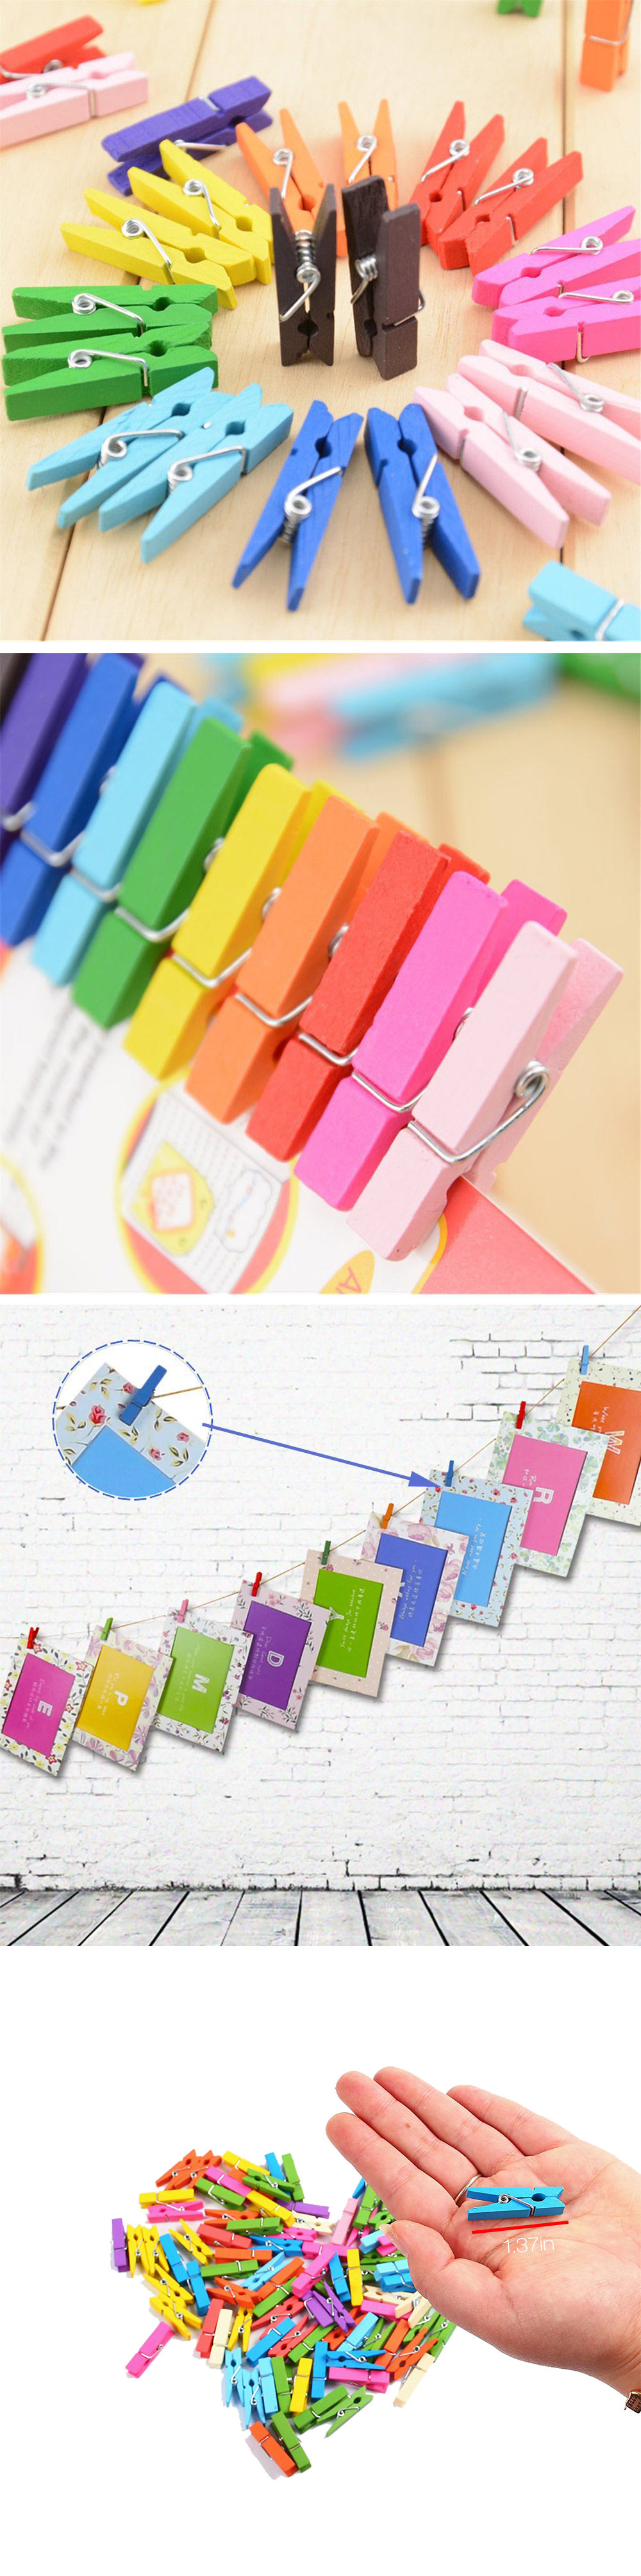 Honana-HN-CH011-10pcs-Colorful-Wodden-Clothespins-Durable-Photo-Paper-Peg-Pin-Craft-Clips-1164885-1